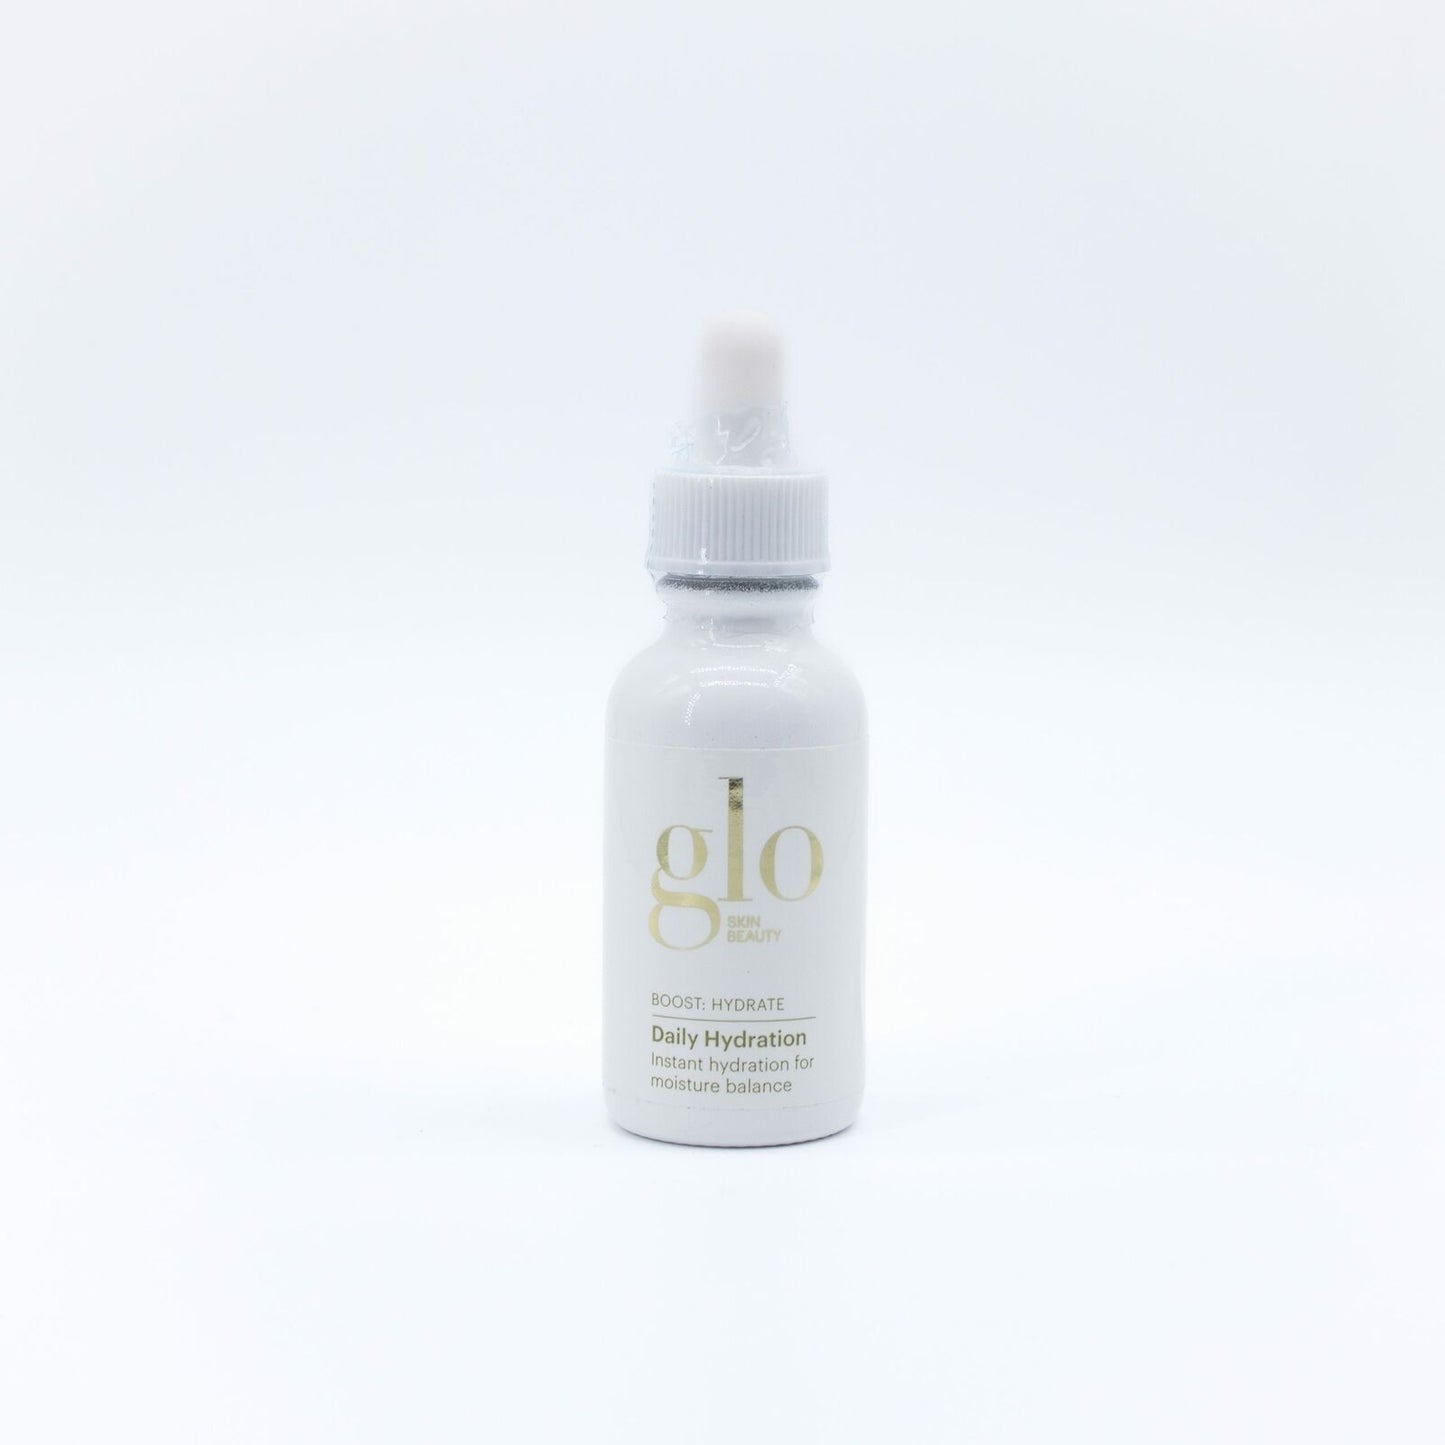 Glo Skin Beauty Daily Hydration 1oz - Imperfect Box